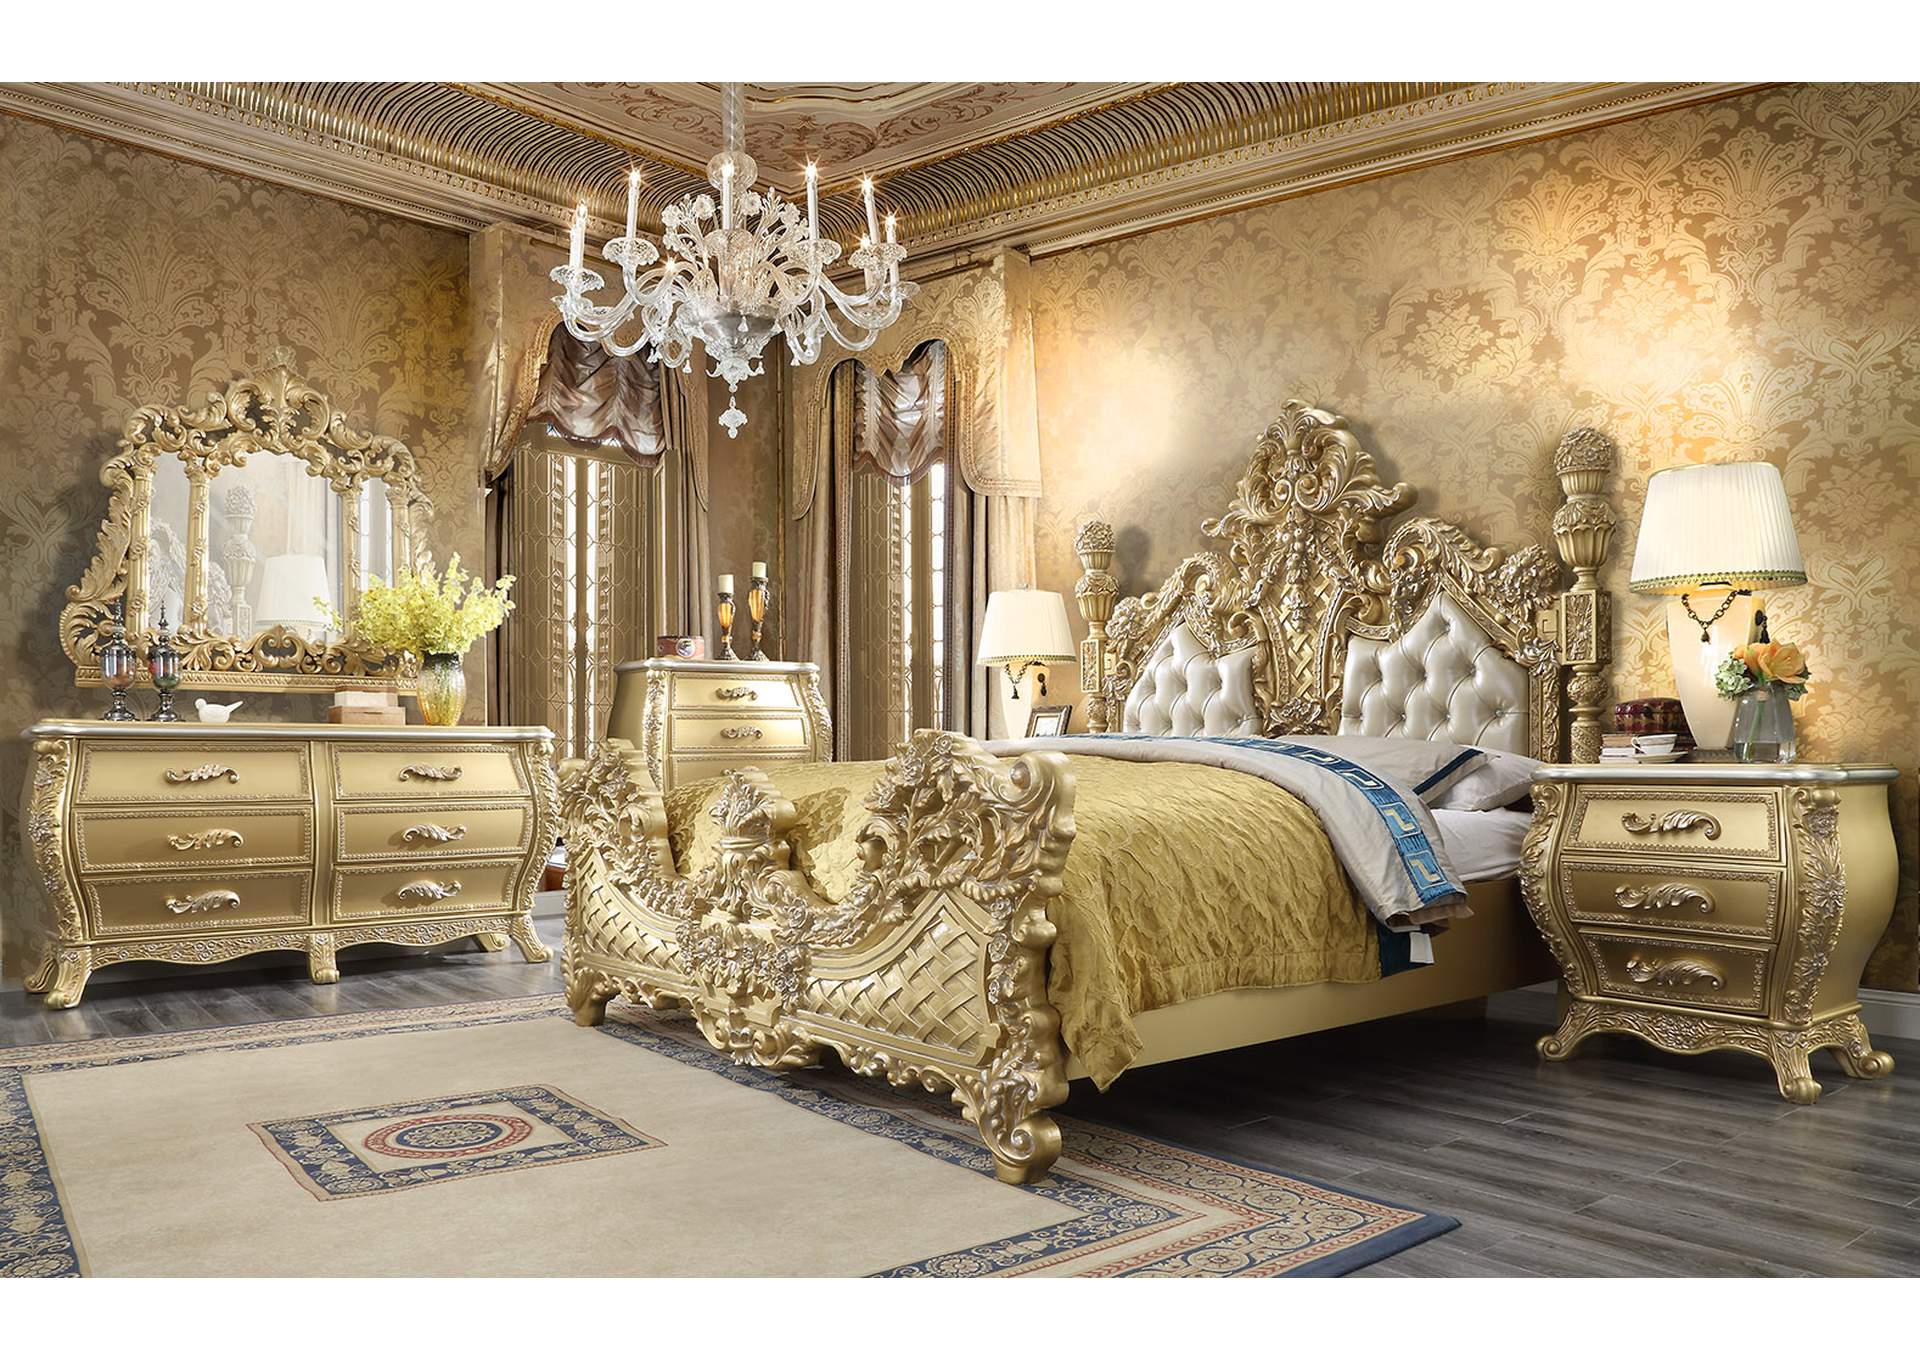 5 Piece California King Bedroom Set,Homey Design